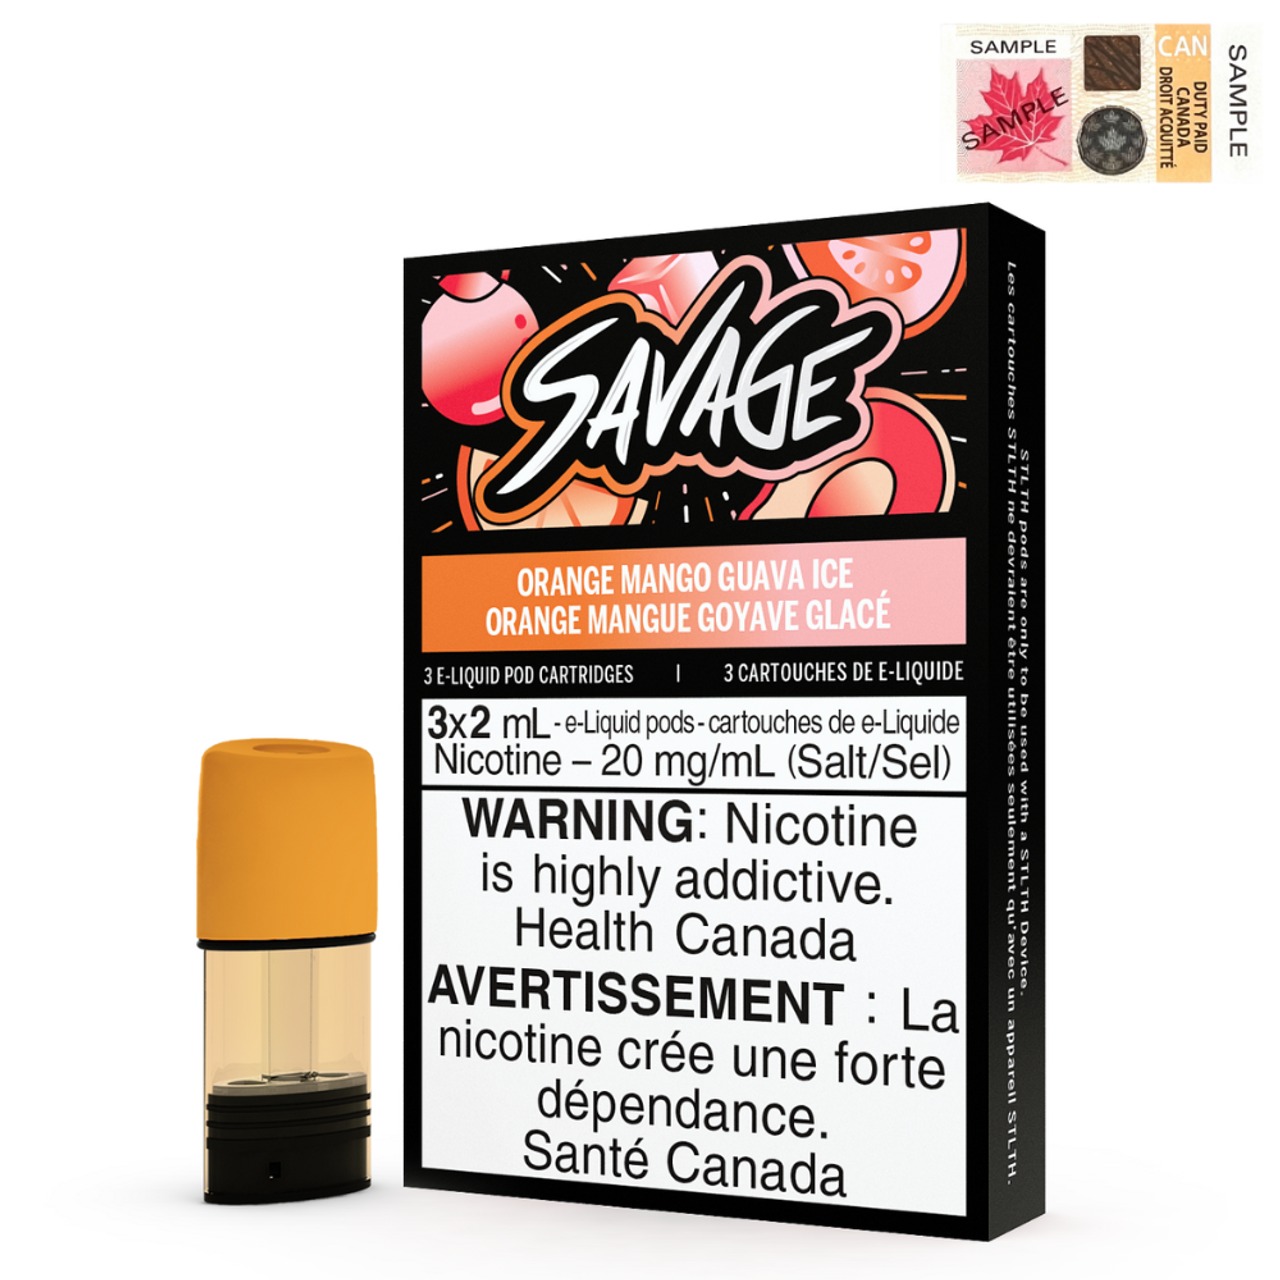 Orange Mango Guava Ice (Stamped) STLTH Savage Pods Pack of 3 - B.C. Compliance